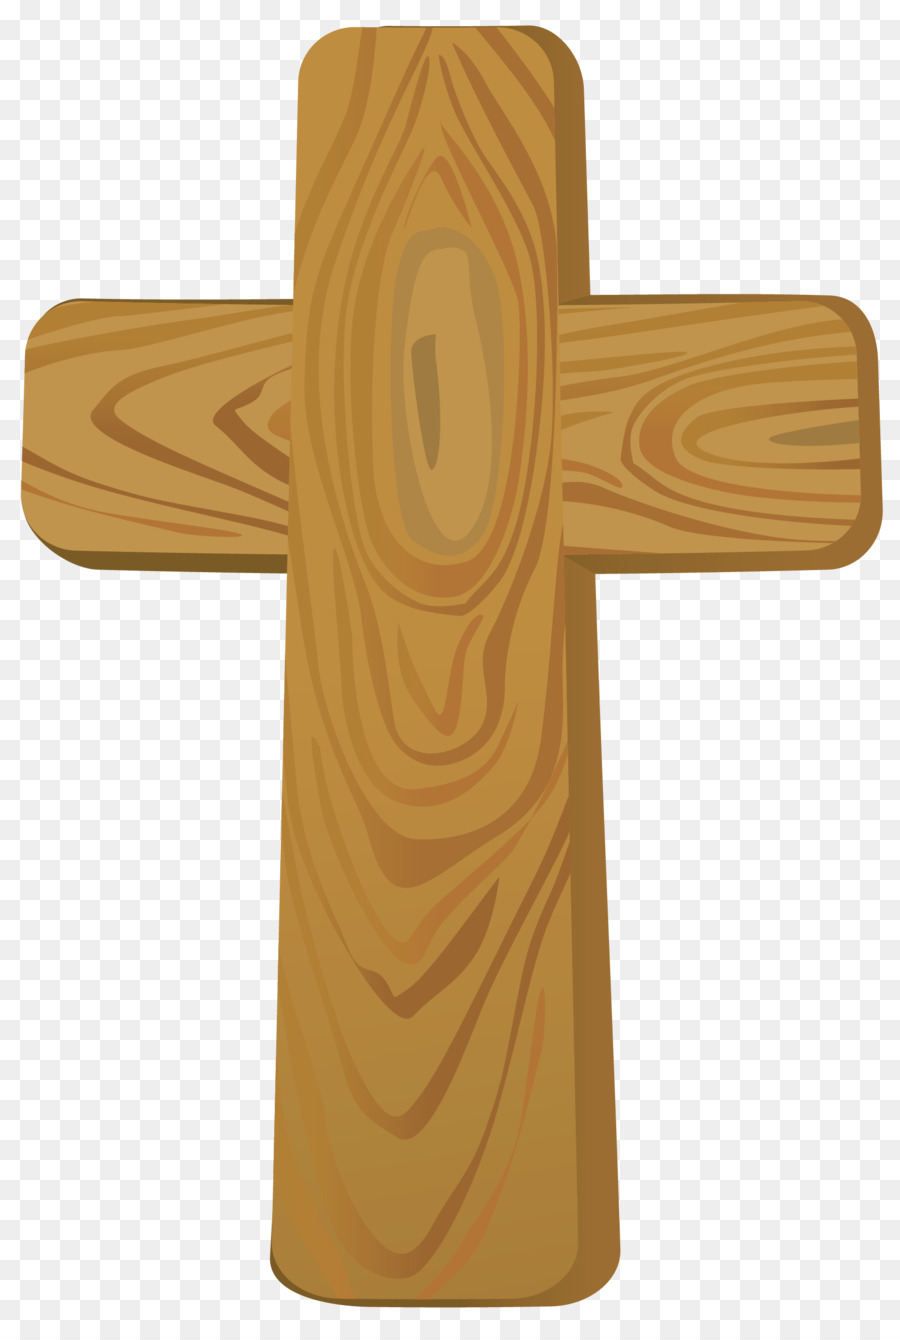 Christian cross Clip art - Wood Clip Cliparts png download - 1782*2652 - Free Transparent Christian Cross png Download.